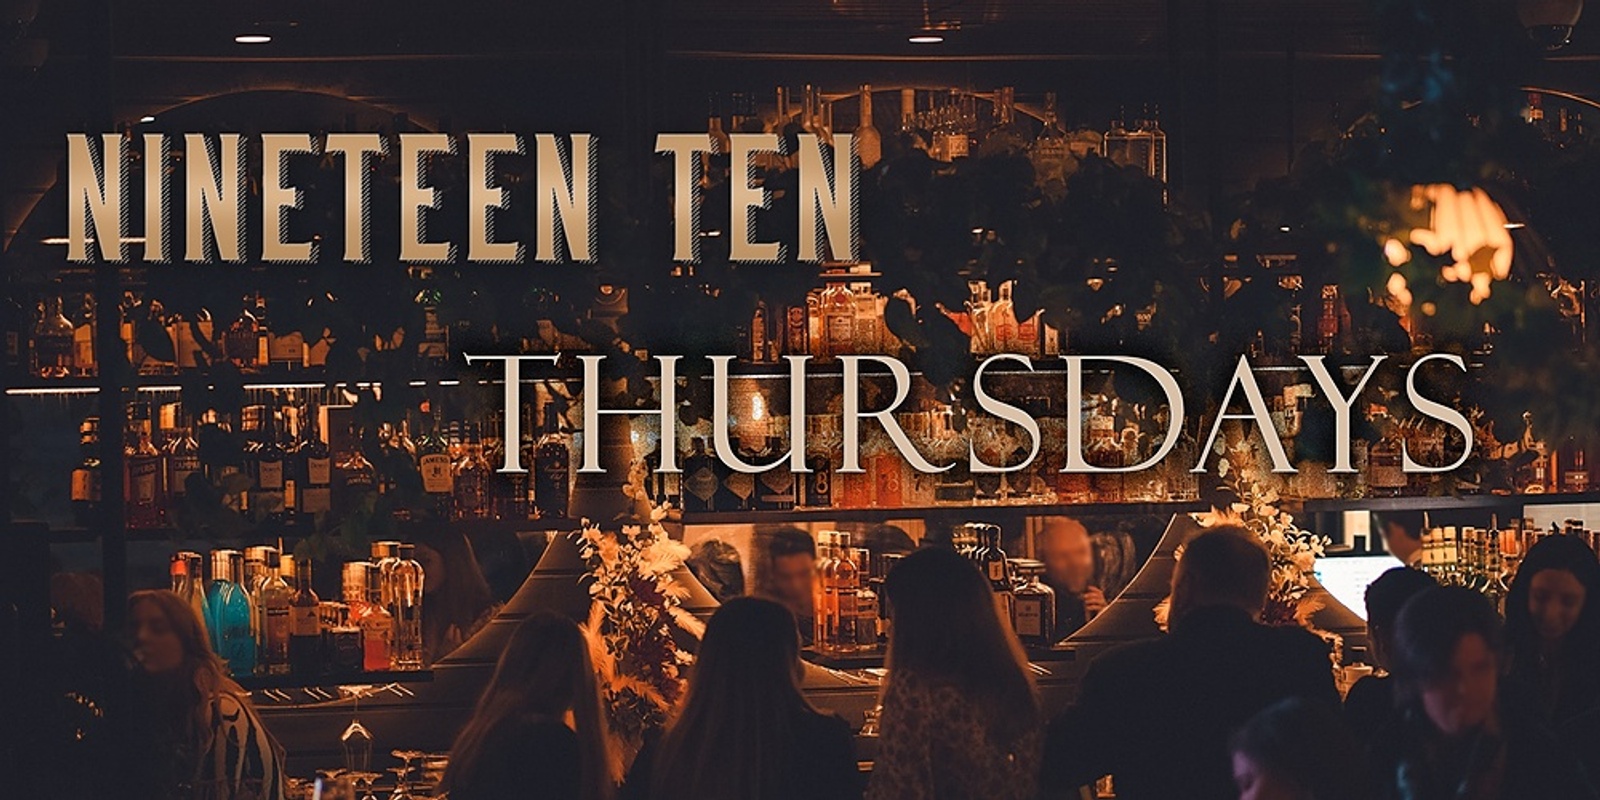 Nineteen Ten Thursdays